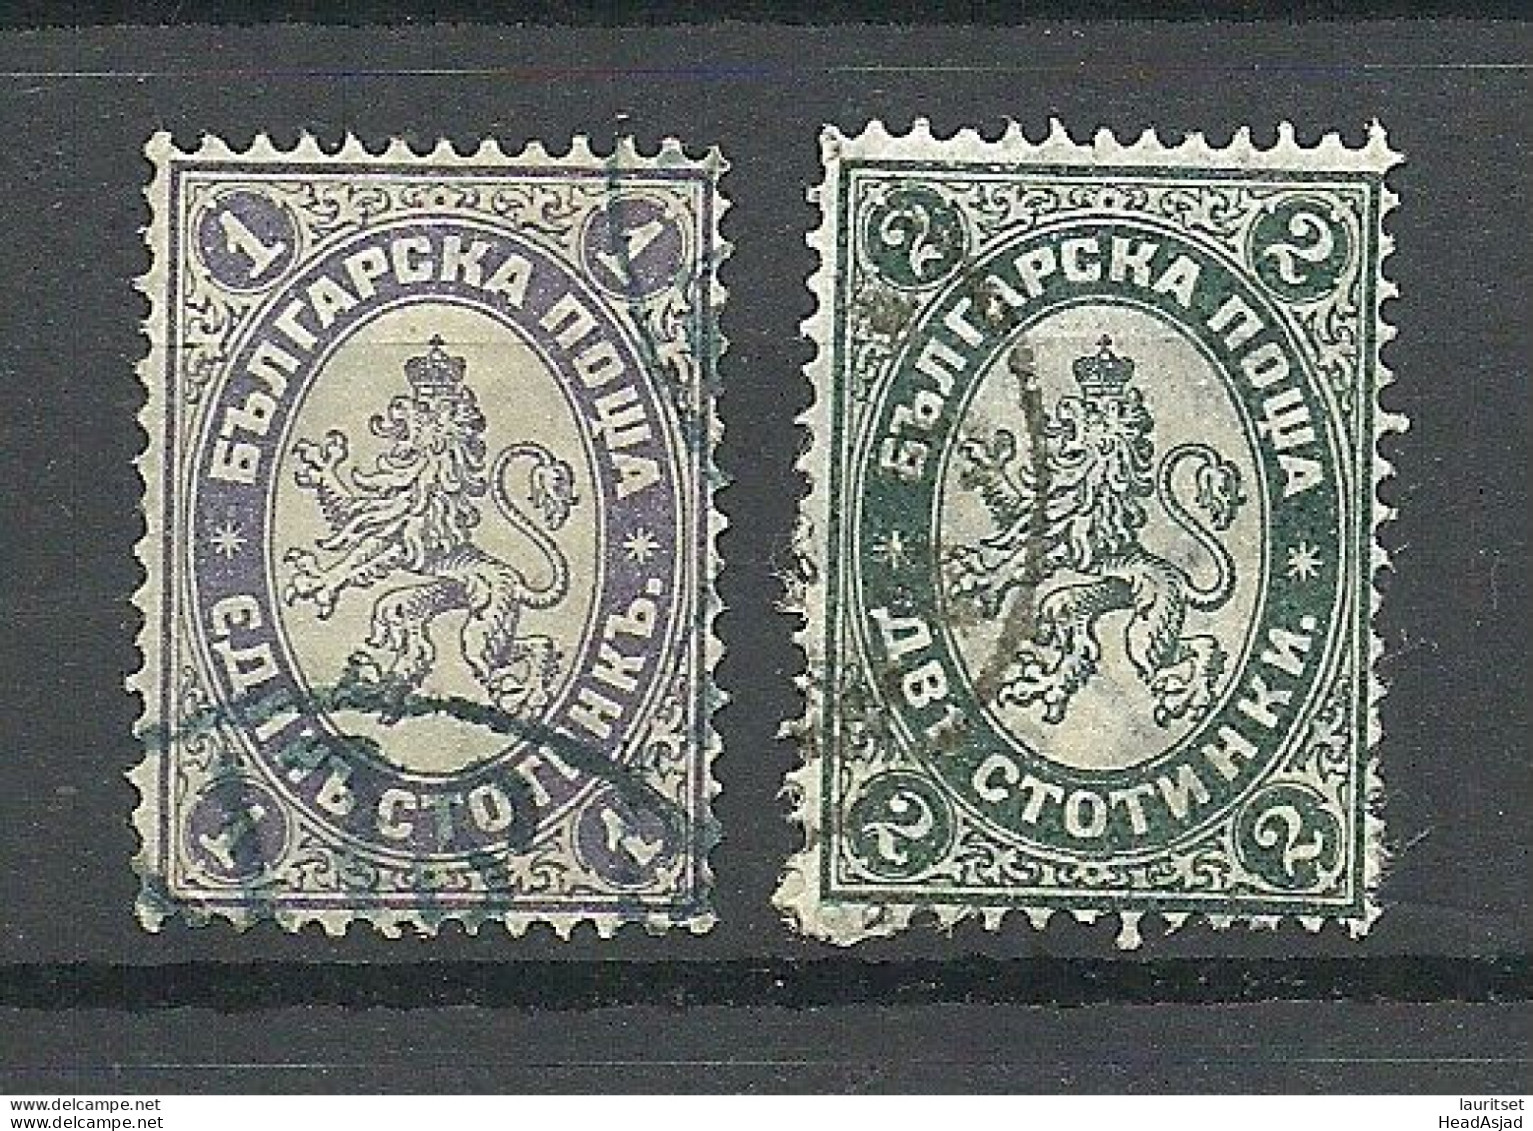 BULGARIA Bulgarien 1882 & 1886 Michel 12 & 26 O - Oblitérés